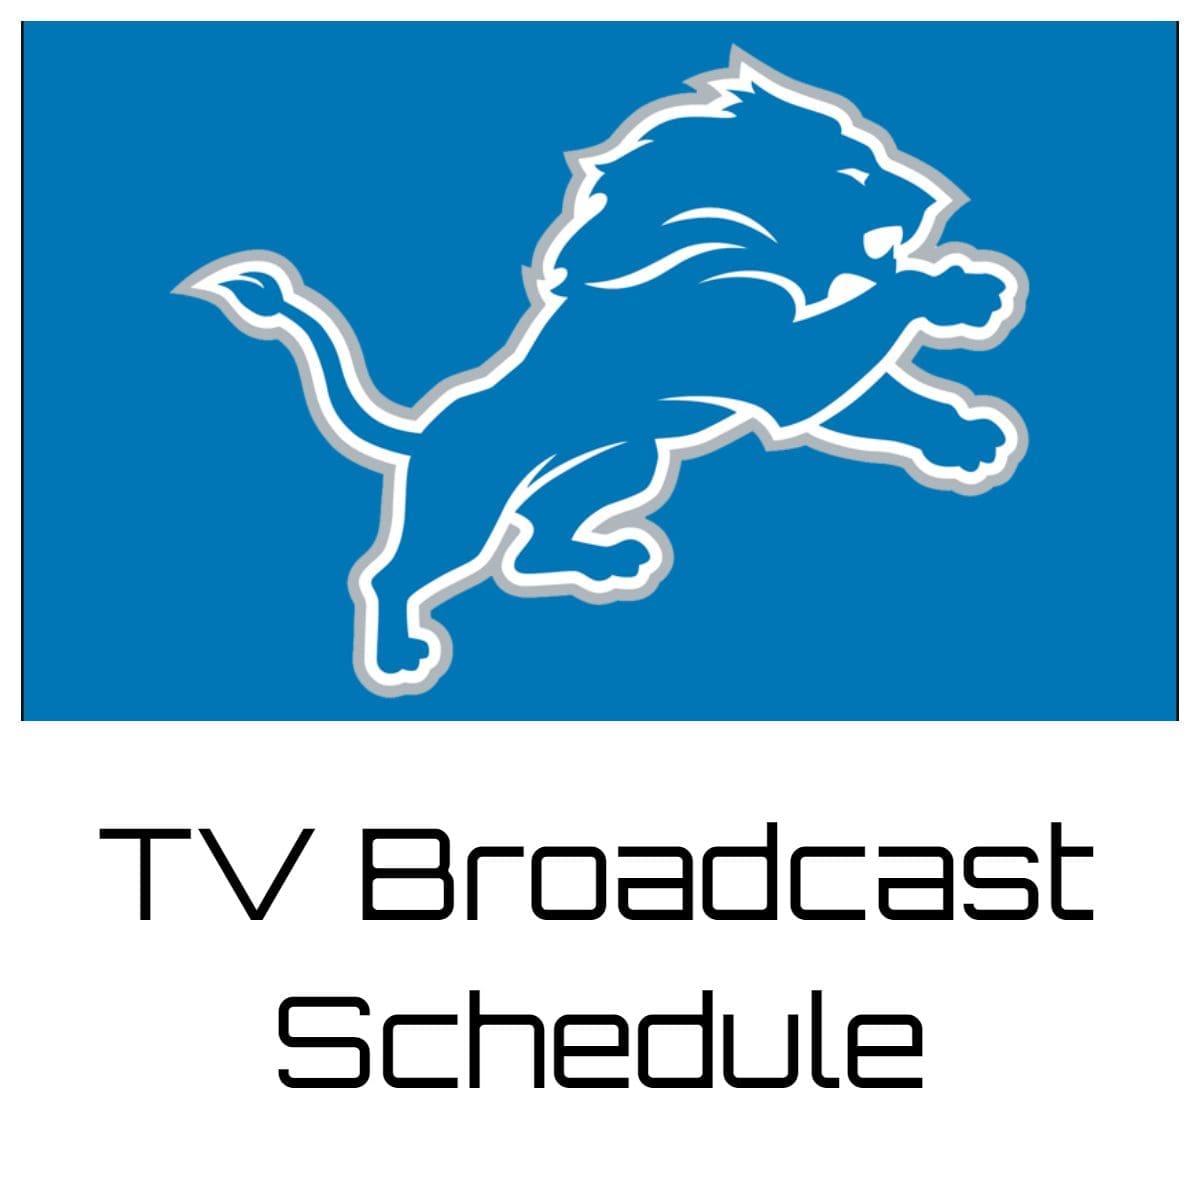 Detroit Lions TV Broadcast Schedule